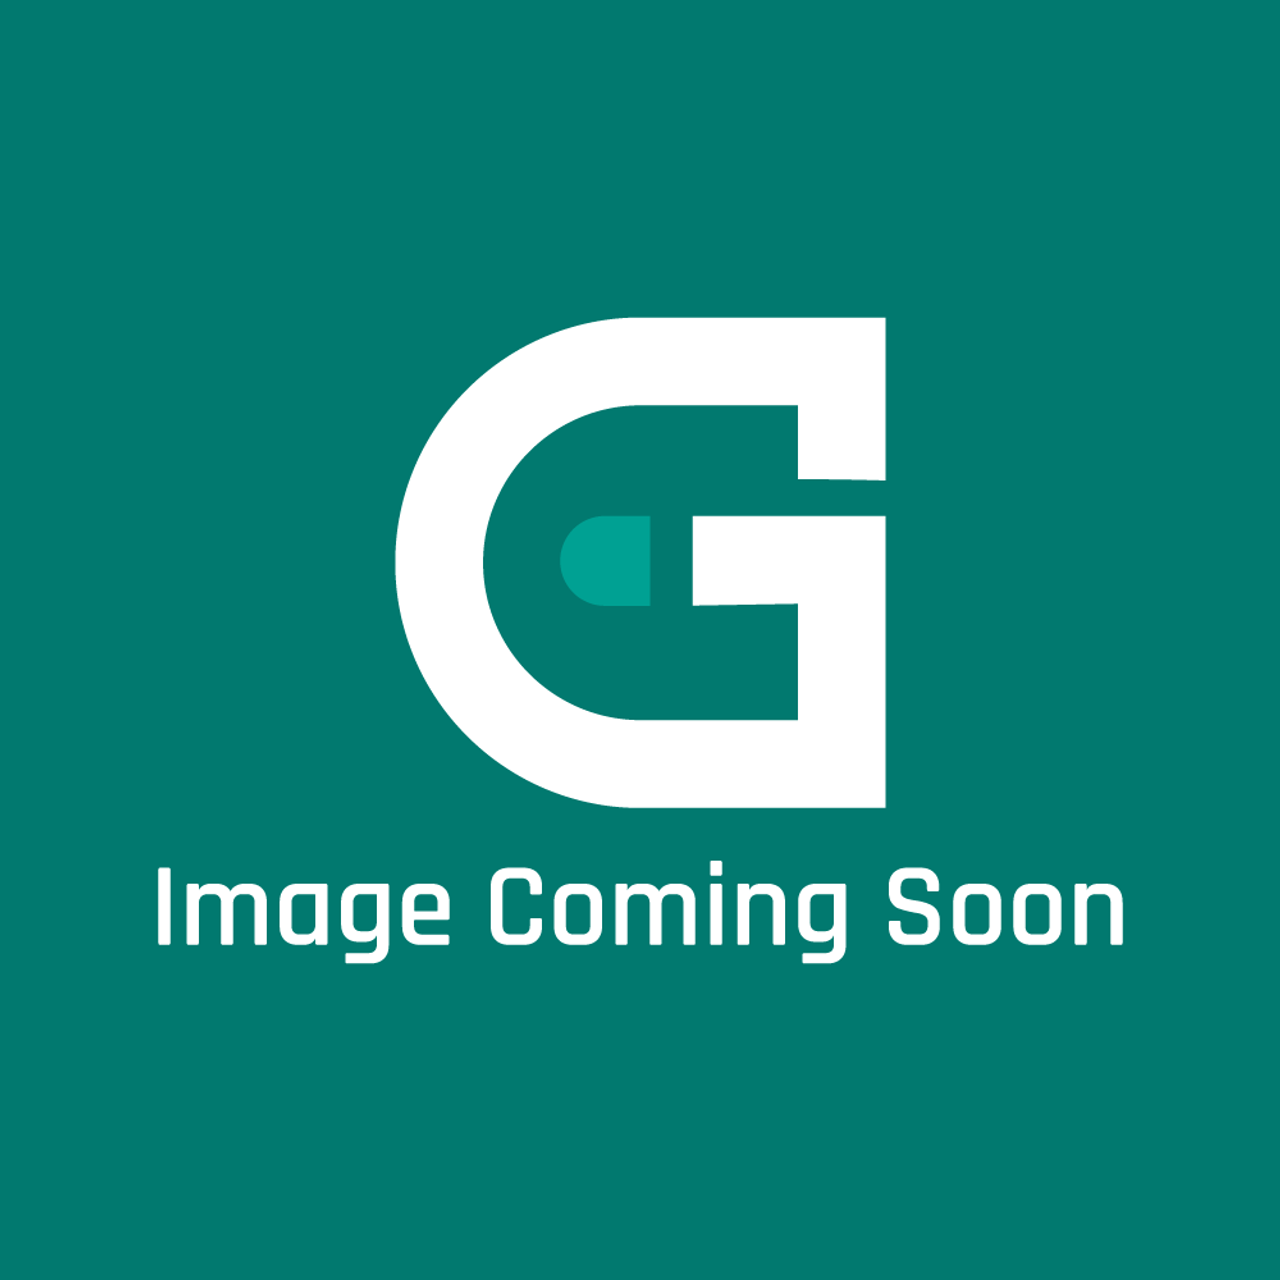 Garland G7344-1-8 - Drip Pan 27Inx29In - Image Coming Soon!